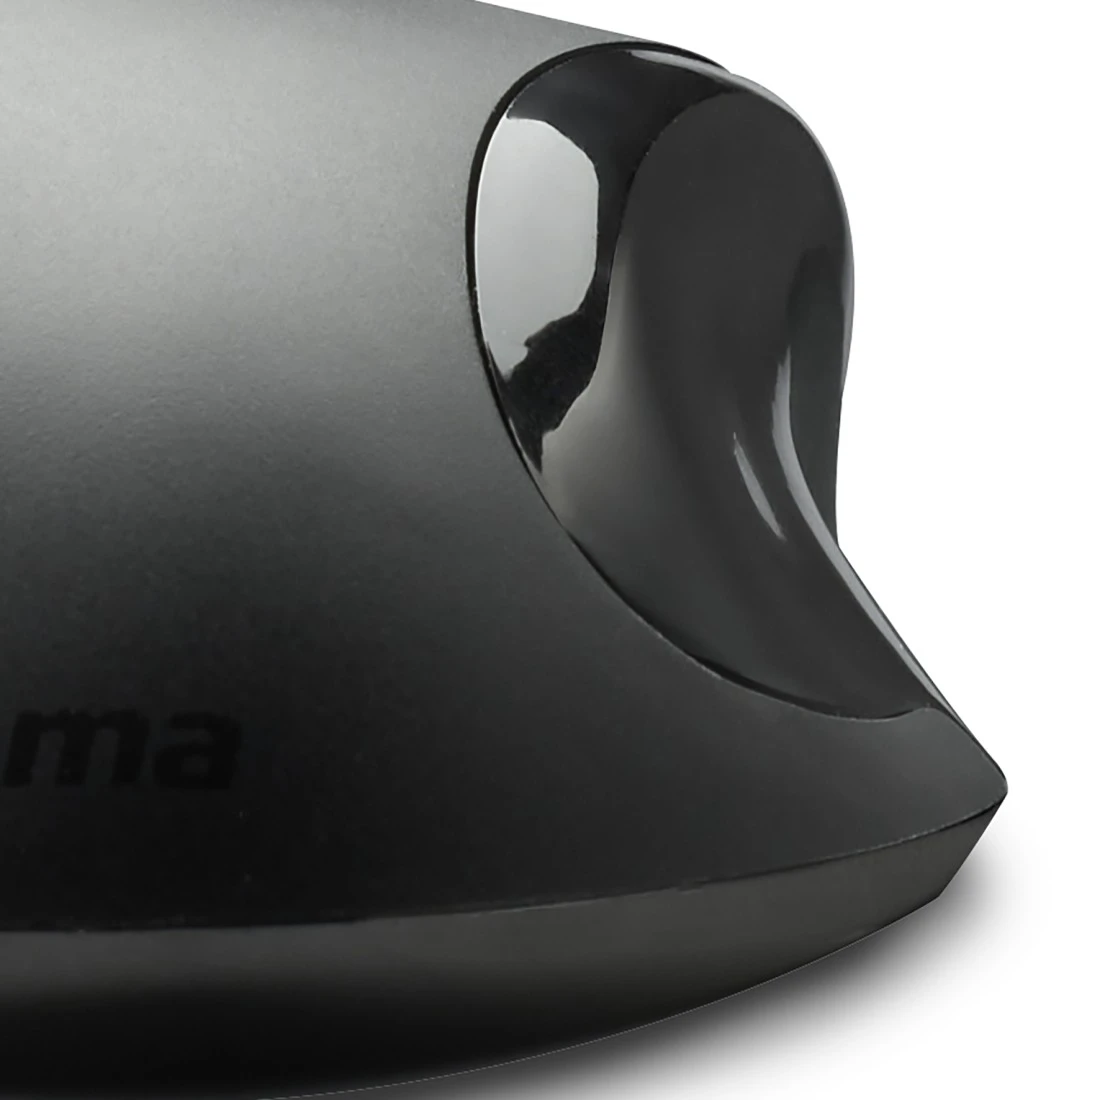 Hama 00173015 MW-900 7-Button Laser Wireless Mouse, black